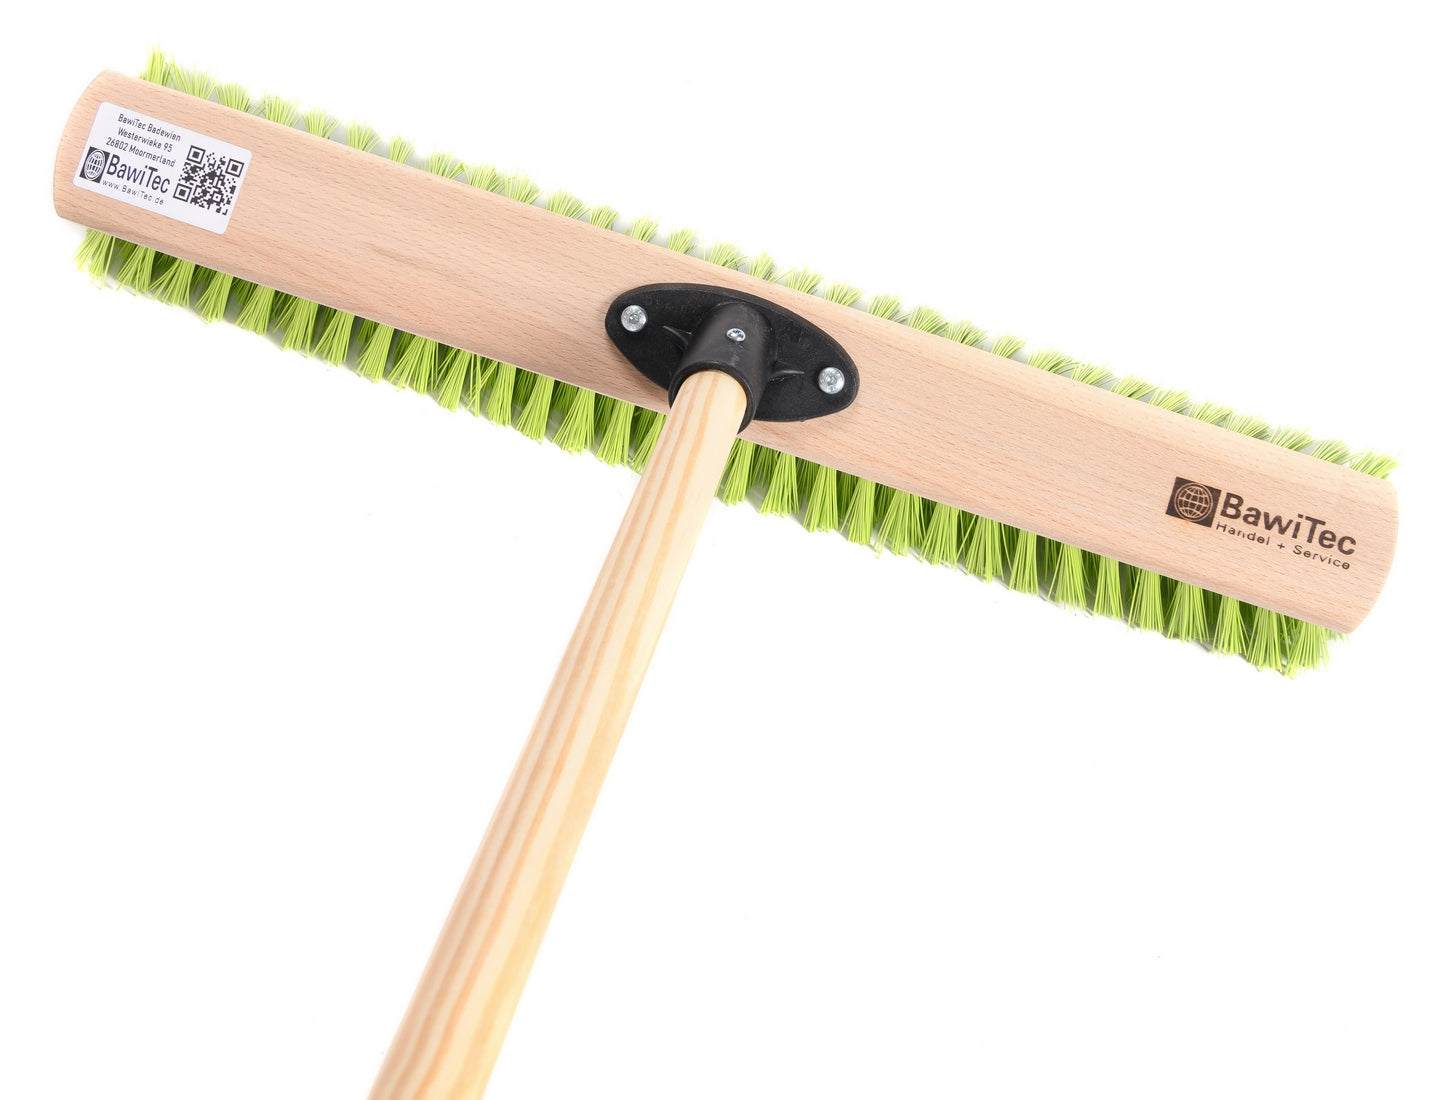 Professional street broom Eralon-Elaston bristles neon green/green with wooden handle garden broom for outdoor use 